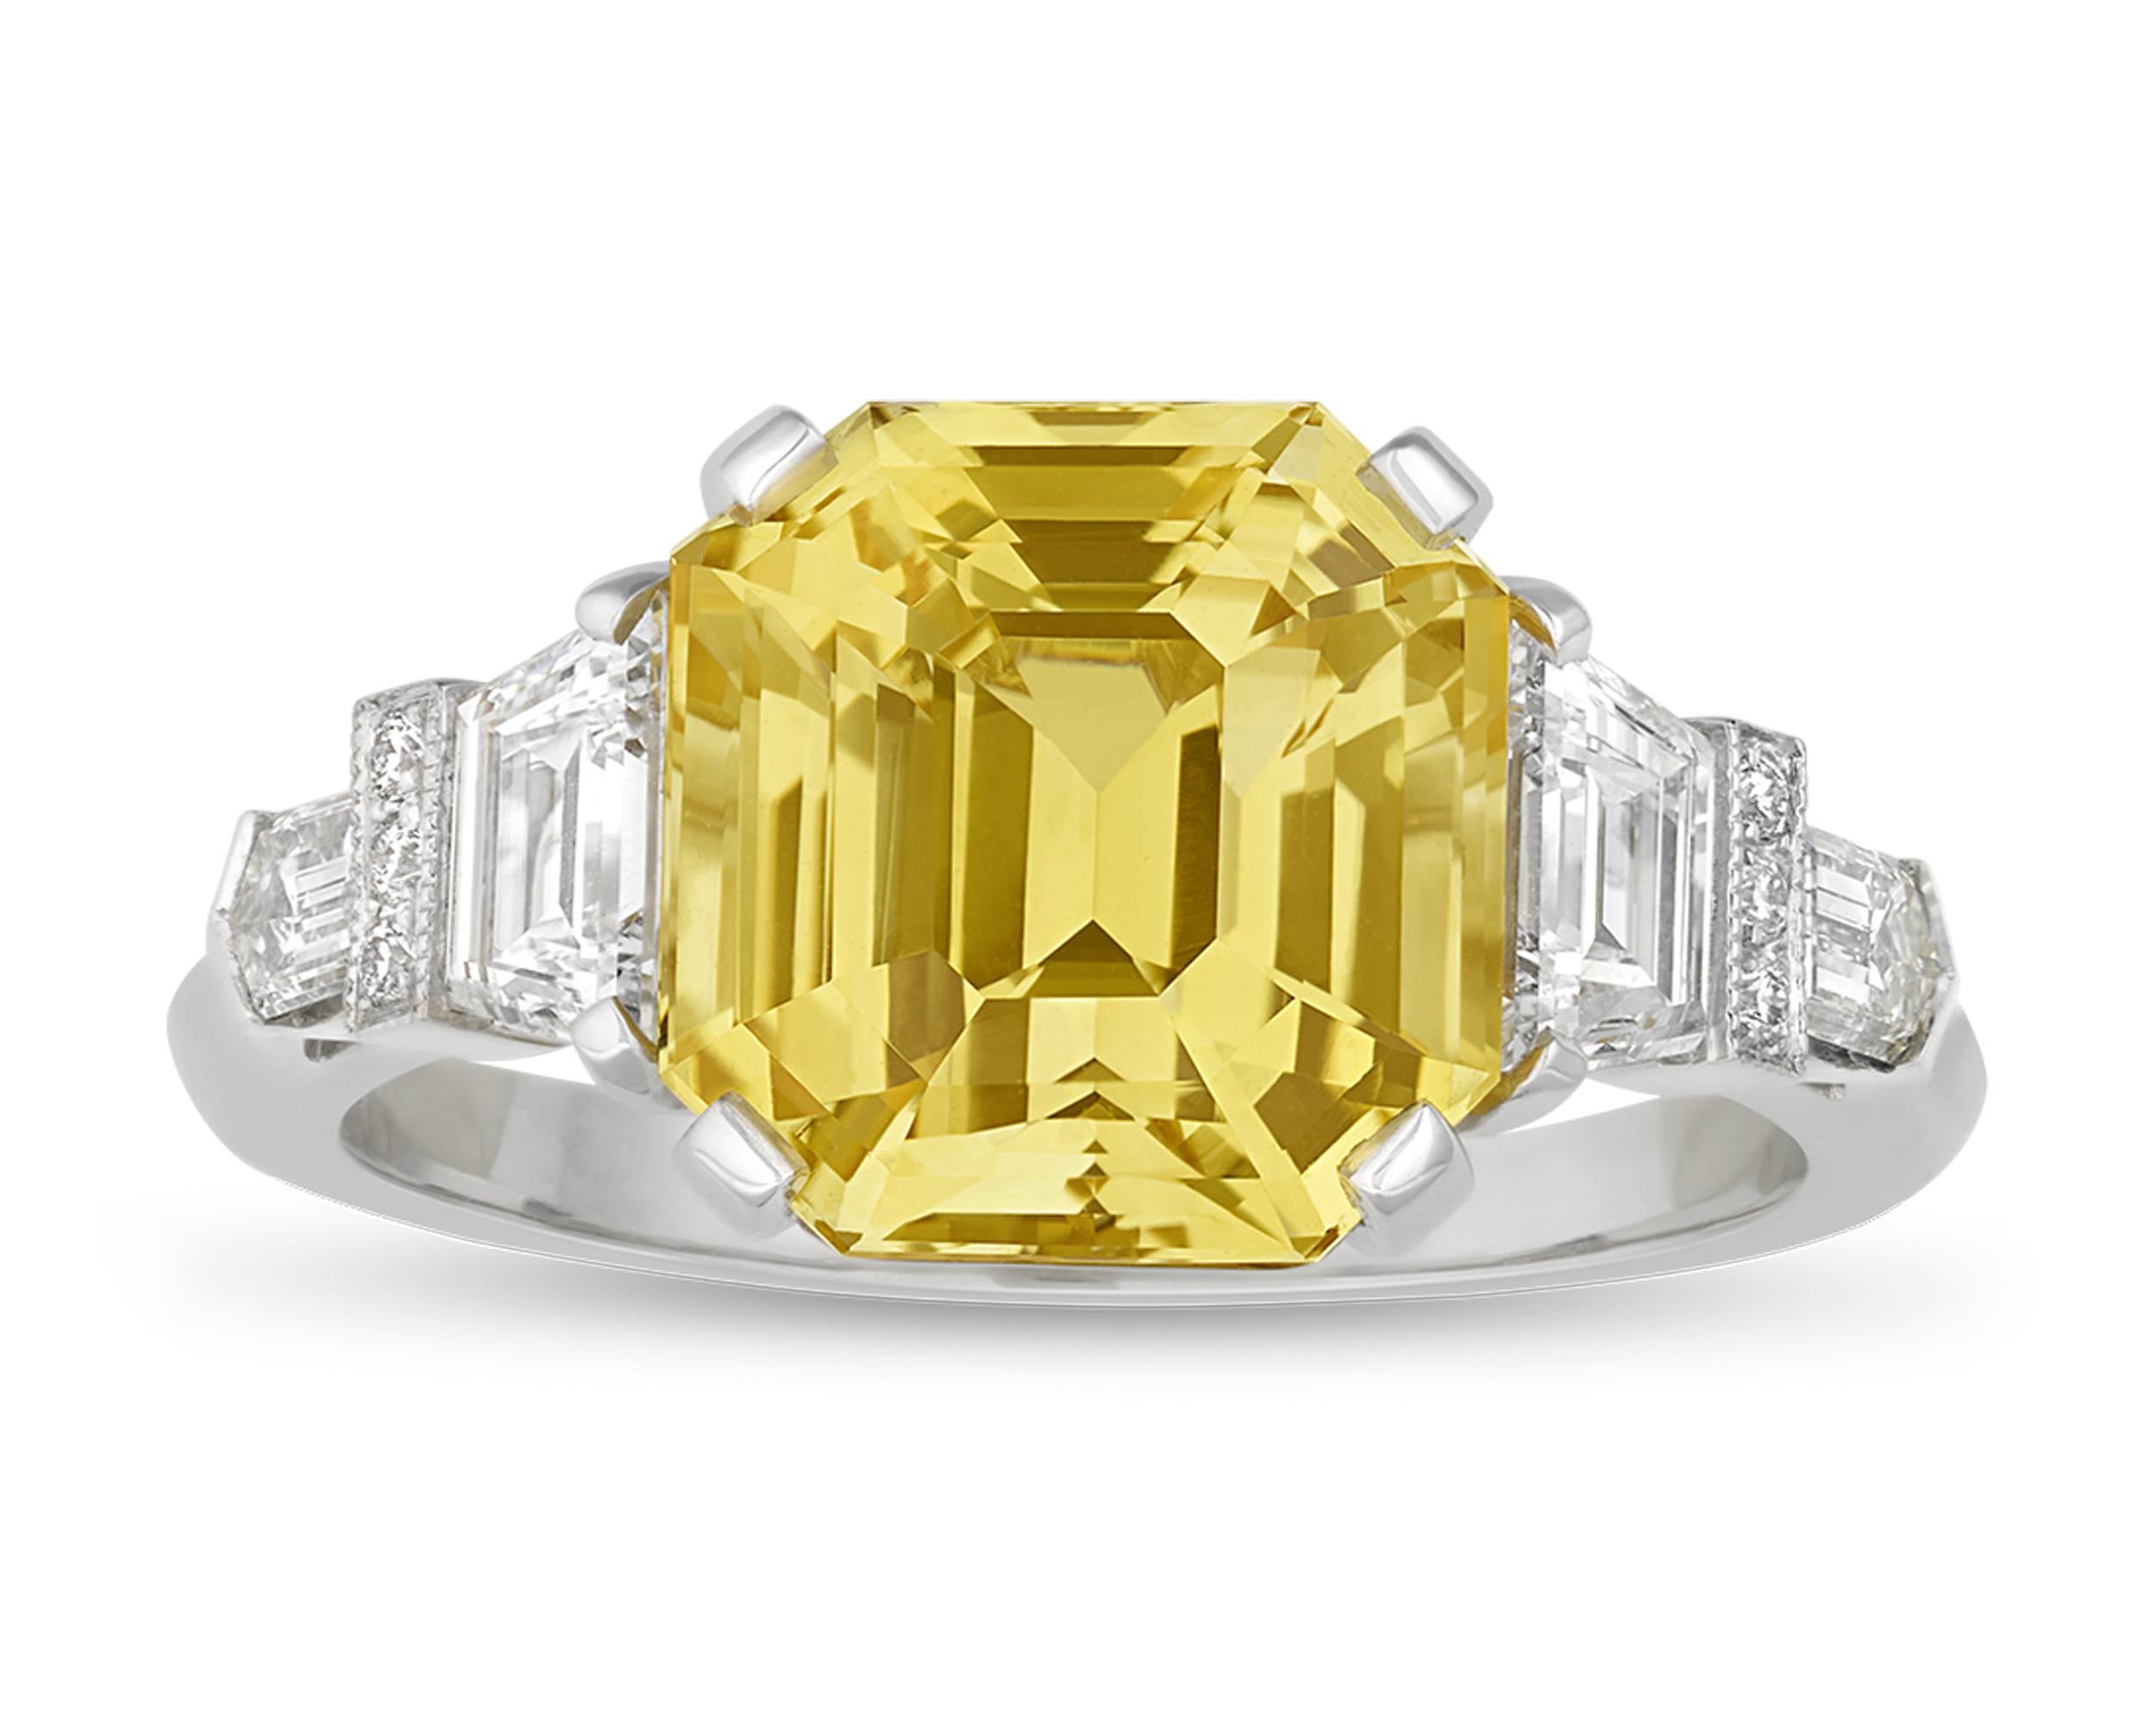 Octagon Cut Yellow Ceylon Sapphire Ring by Raymond Yard, 5.10 Carats For Sale